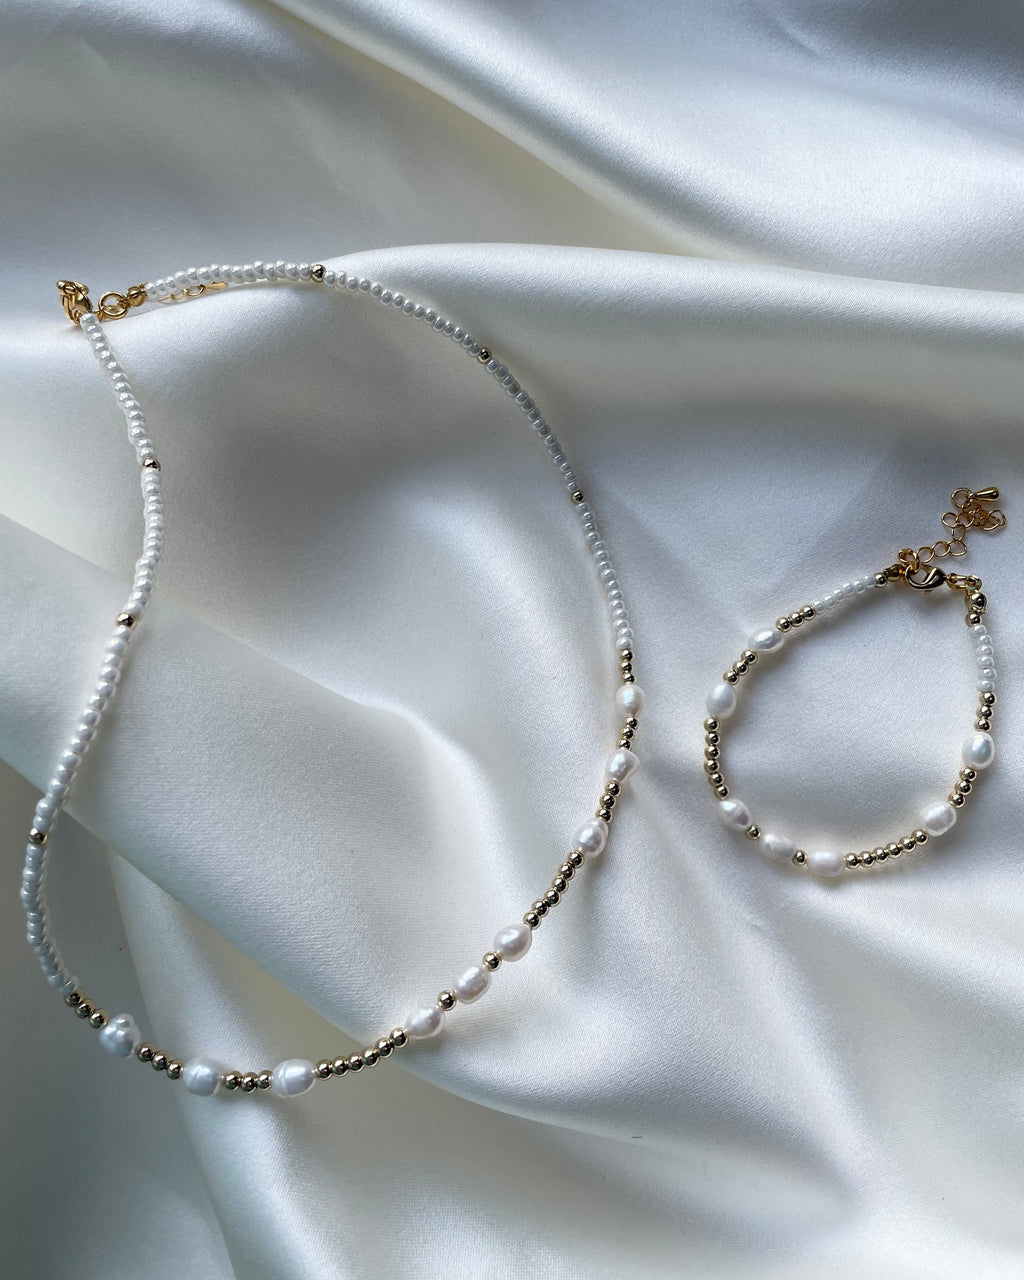 Pearl bracelet and necklace bundle